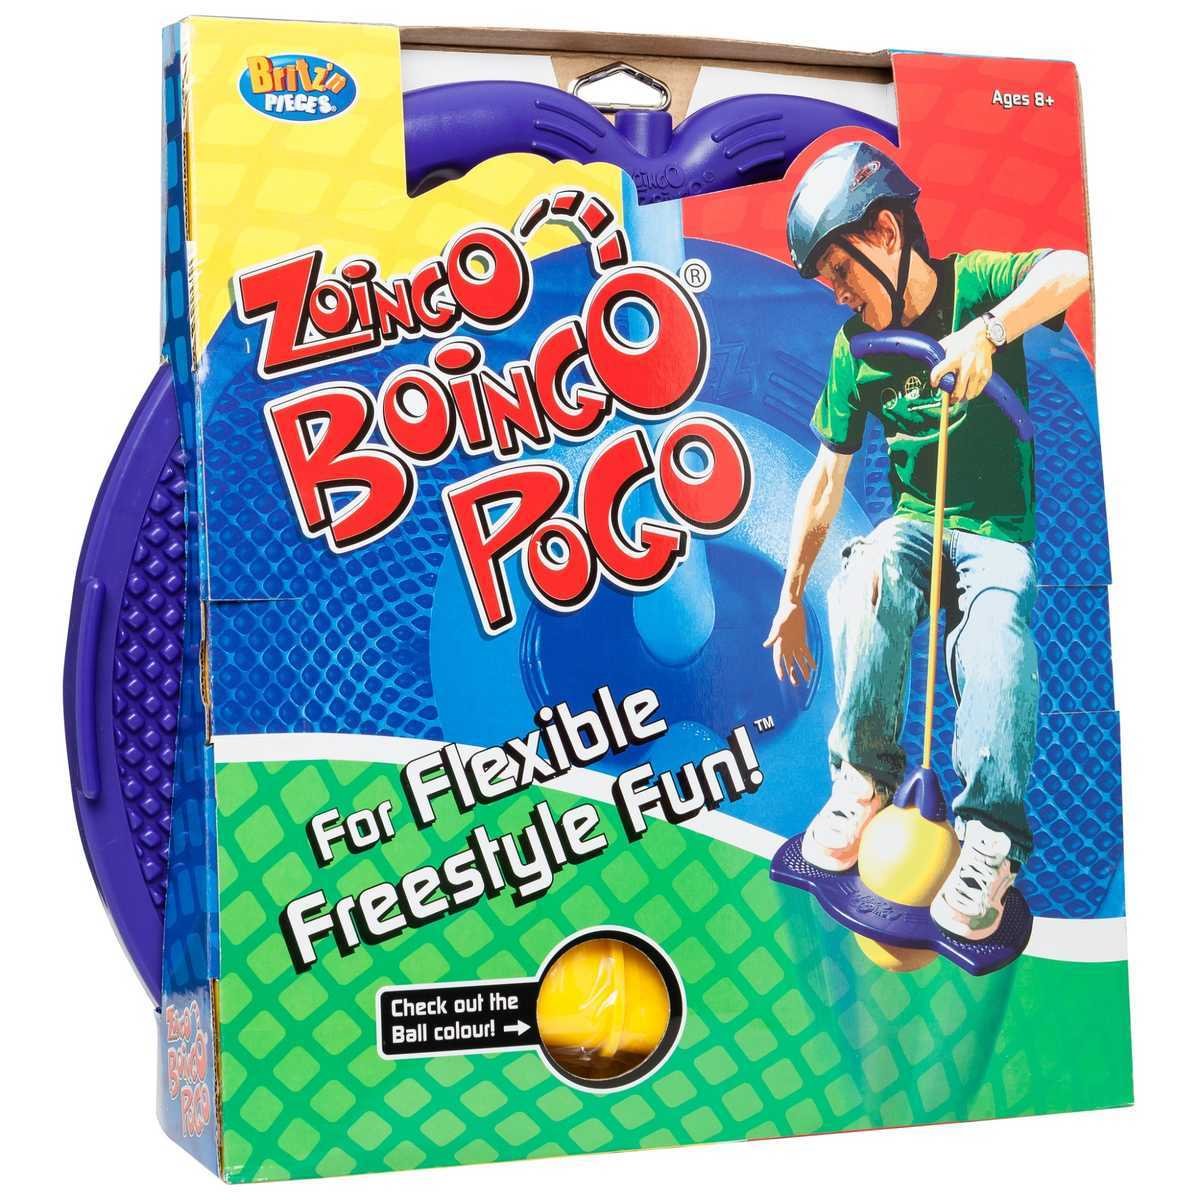 Zoingo Boingo-Yarrawonga Fun and Games